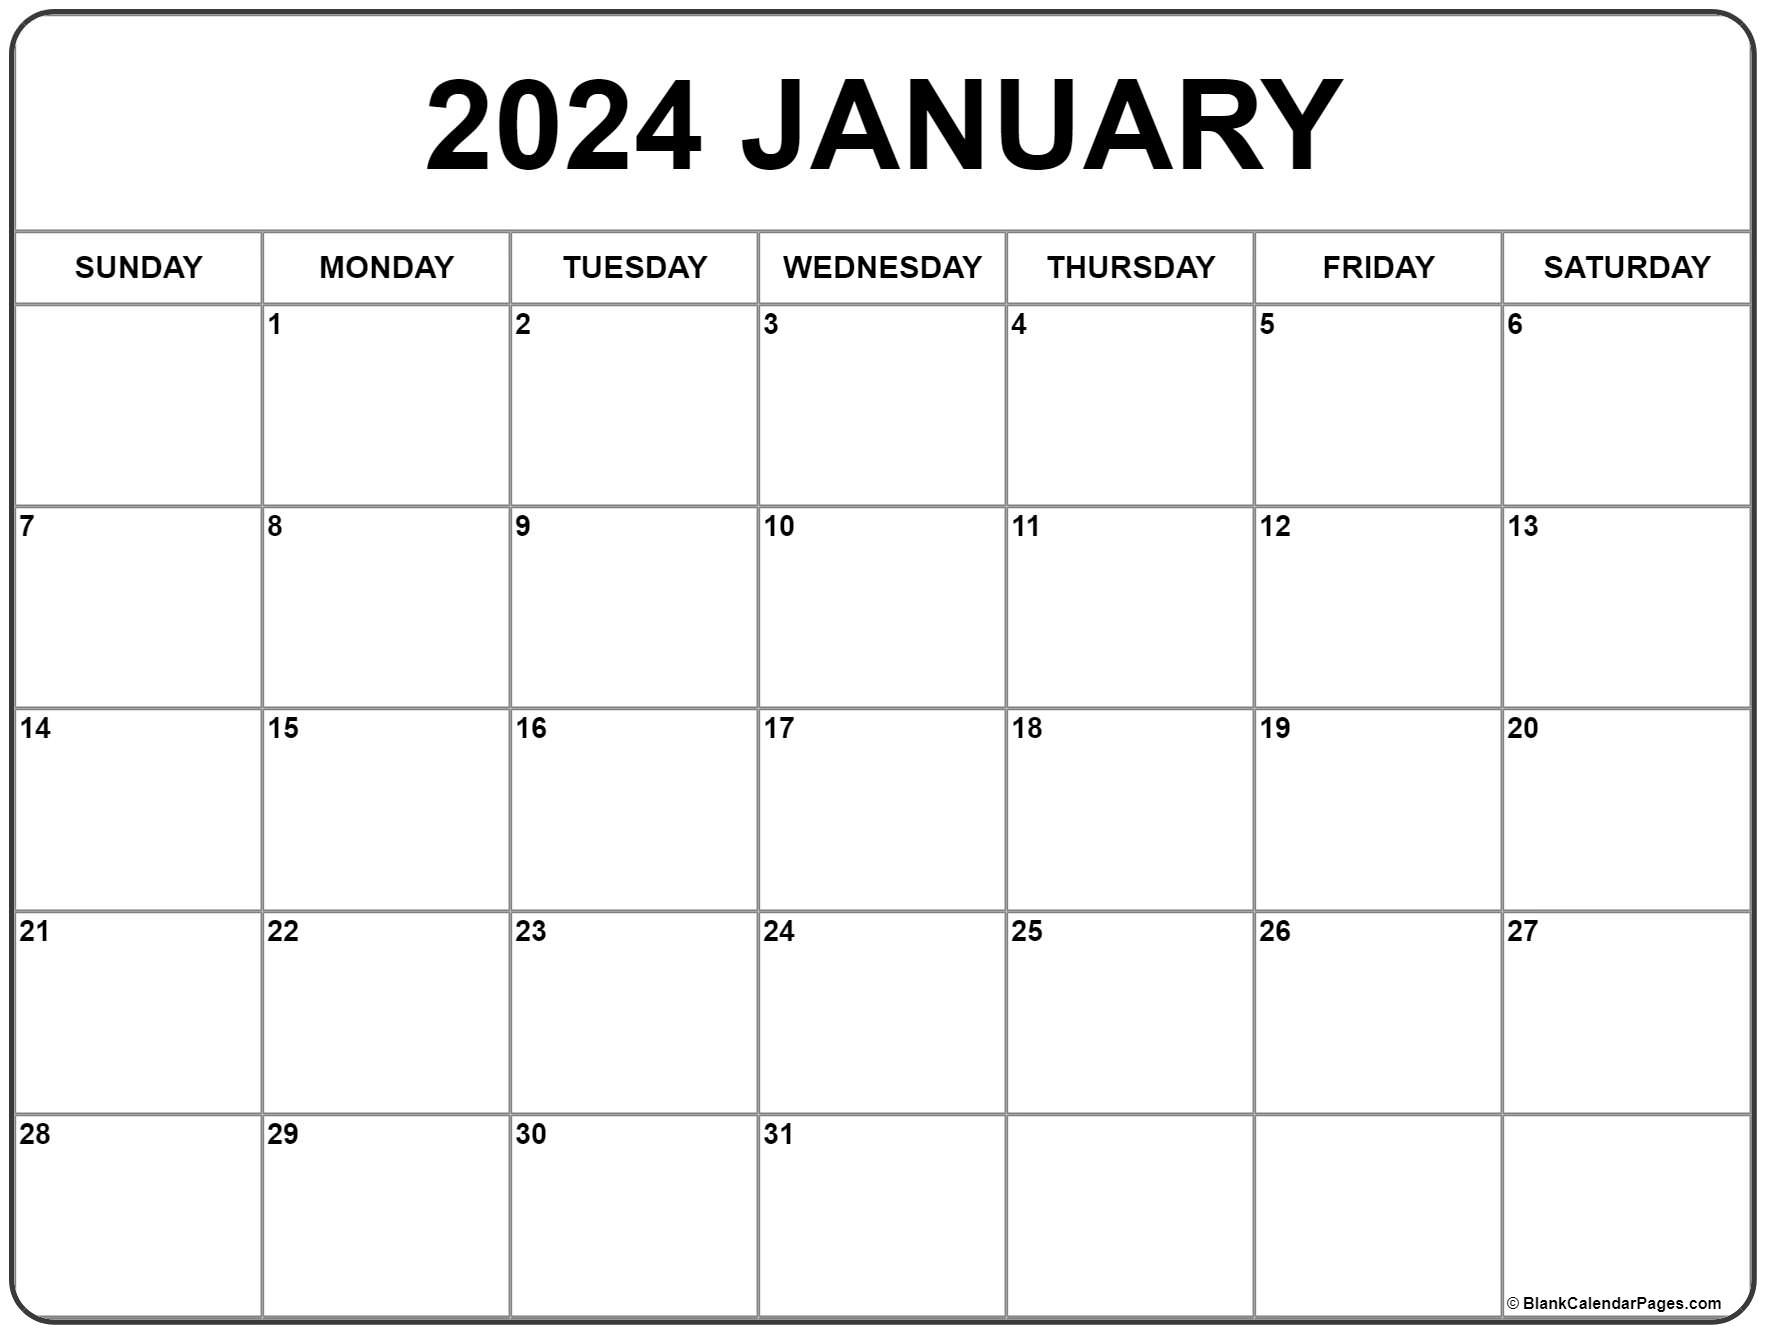 January 2024 Calendar | Free Printable Calendar for January 2024 Monthly Calendar Printable